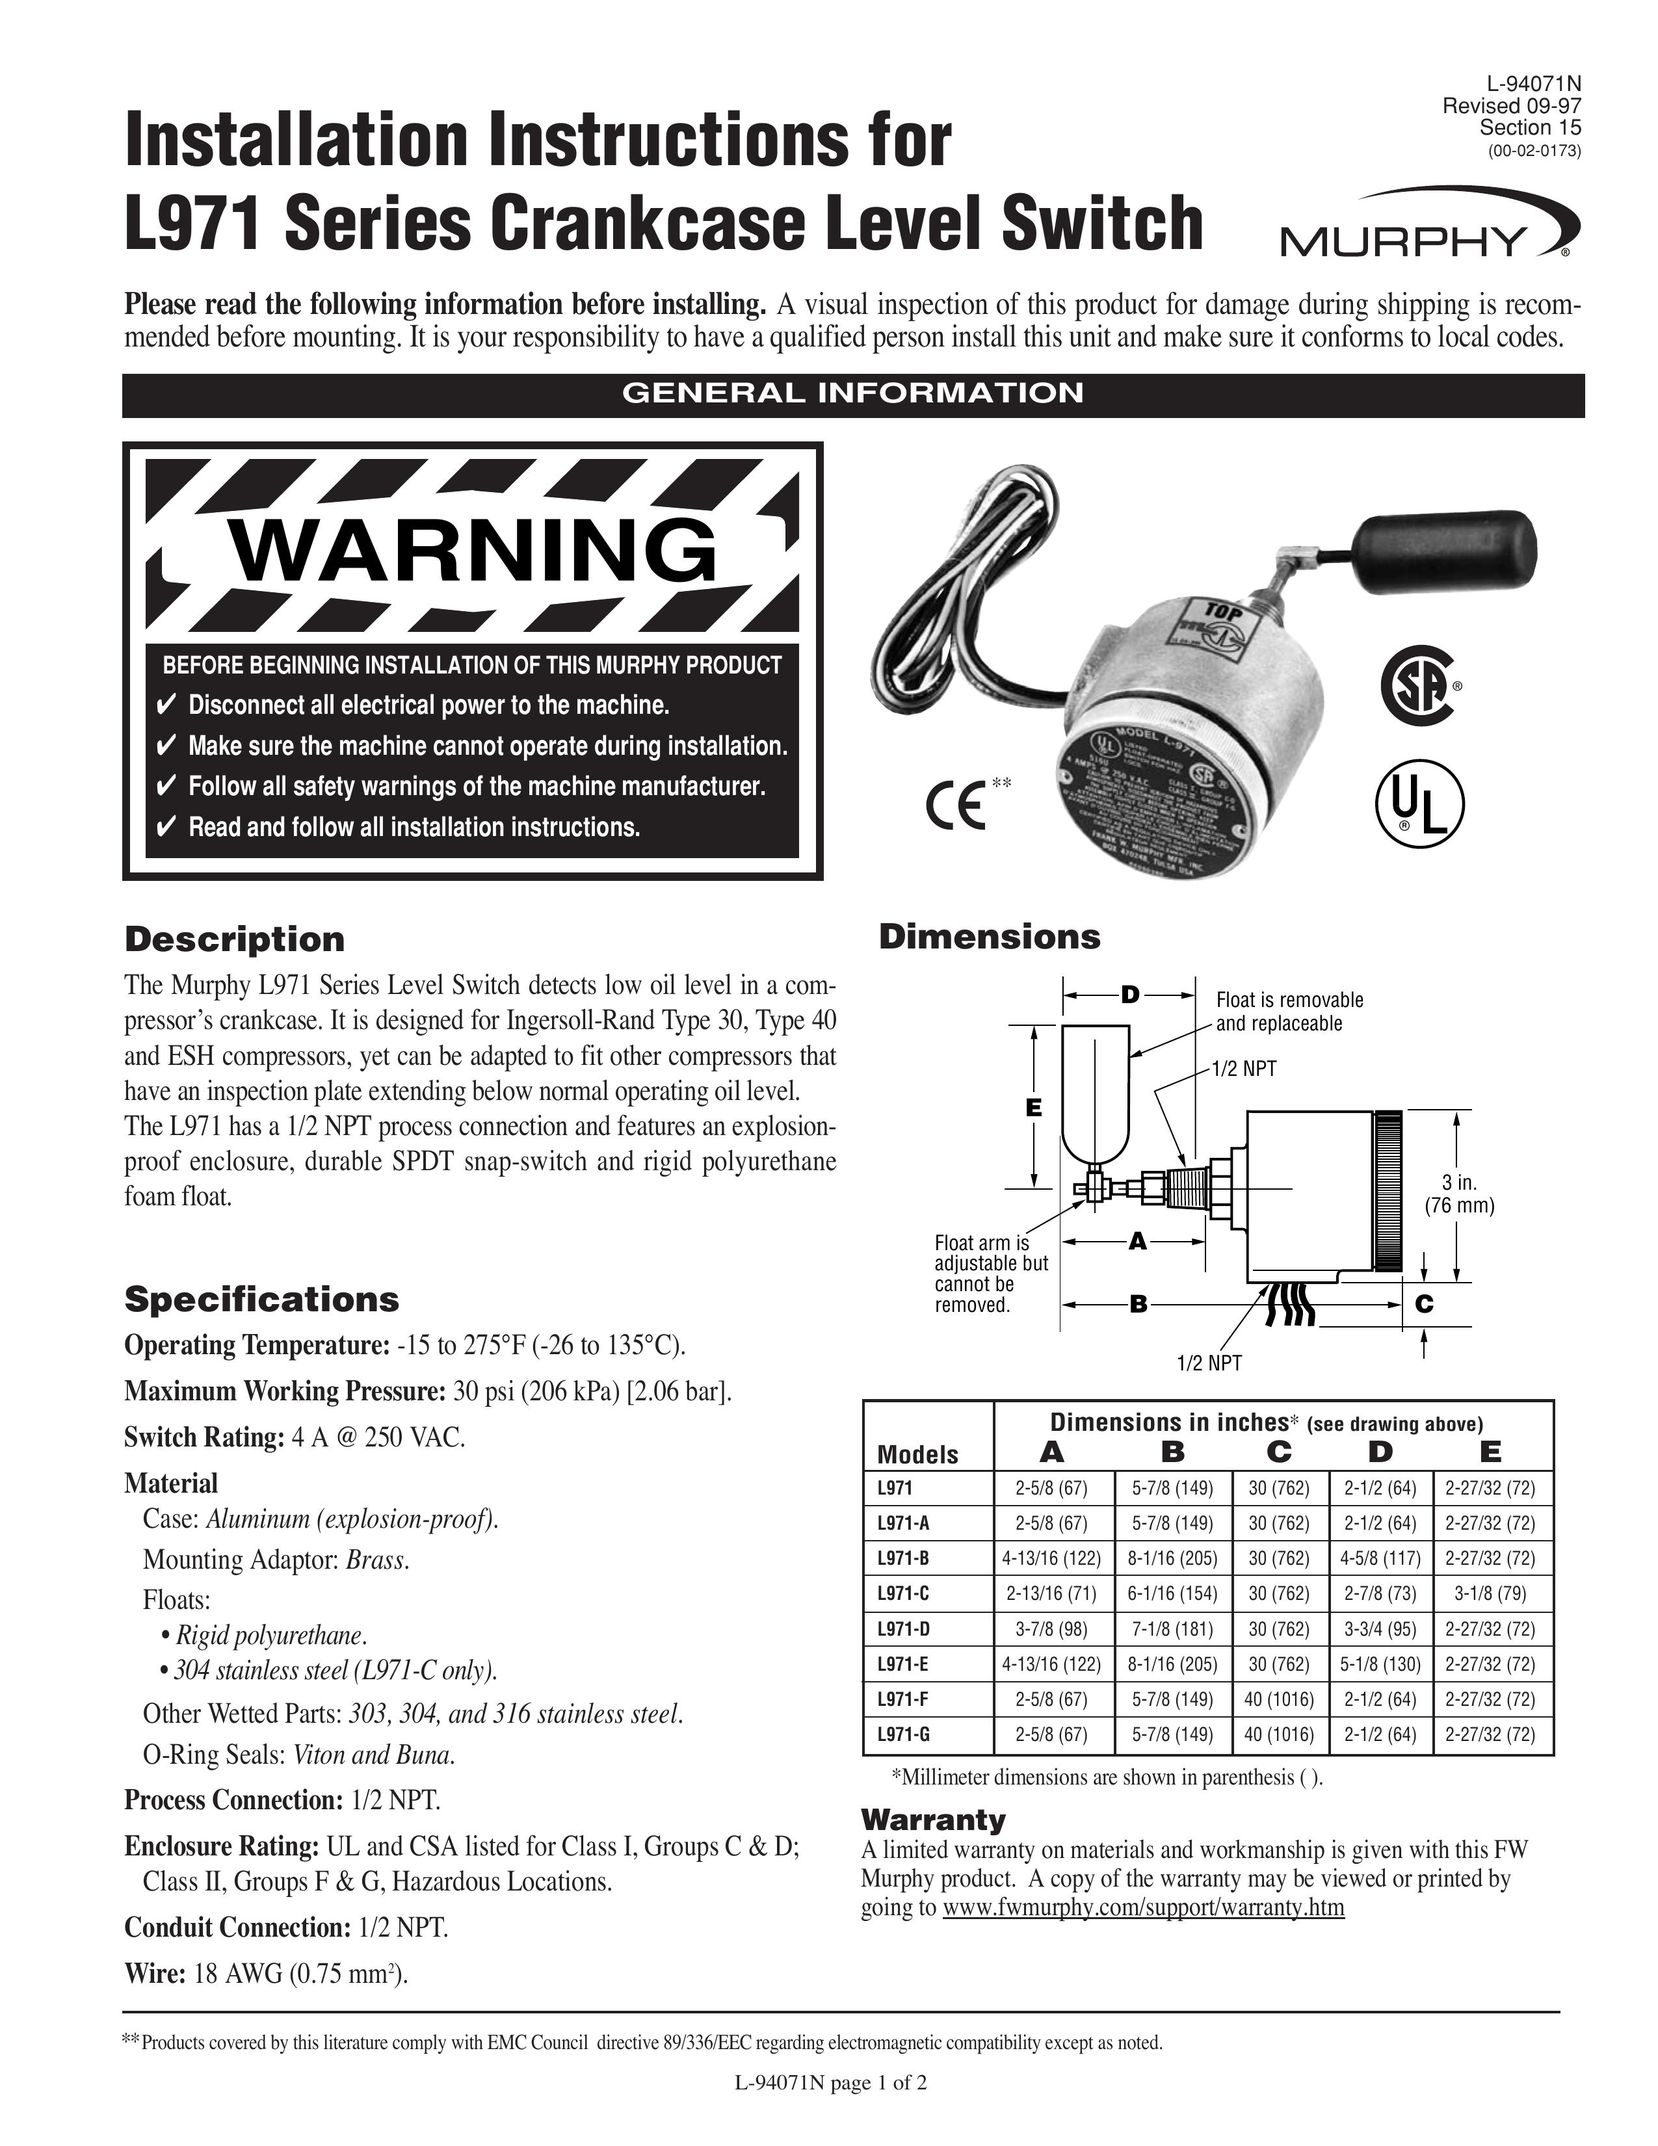 Murphy L971 Series Switch User Manual